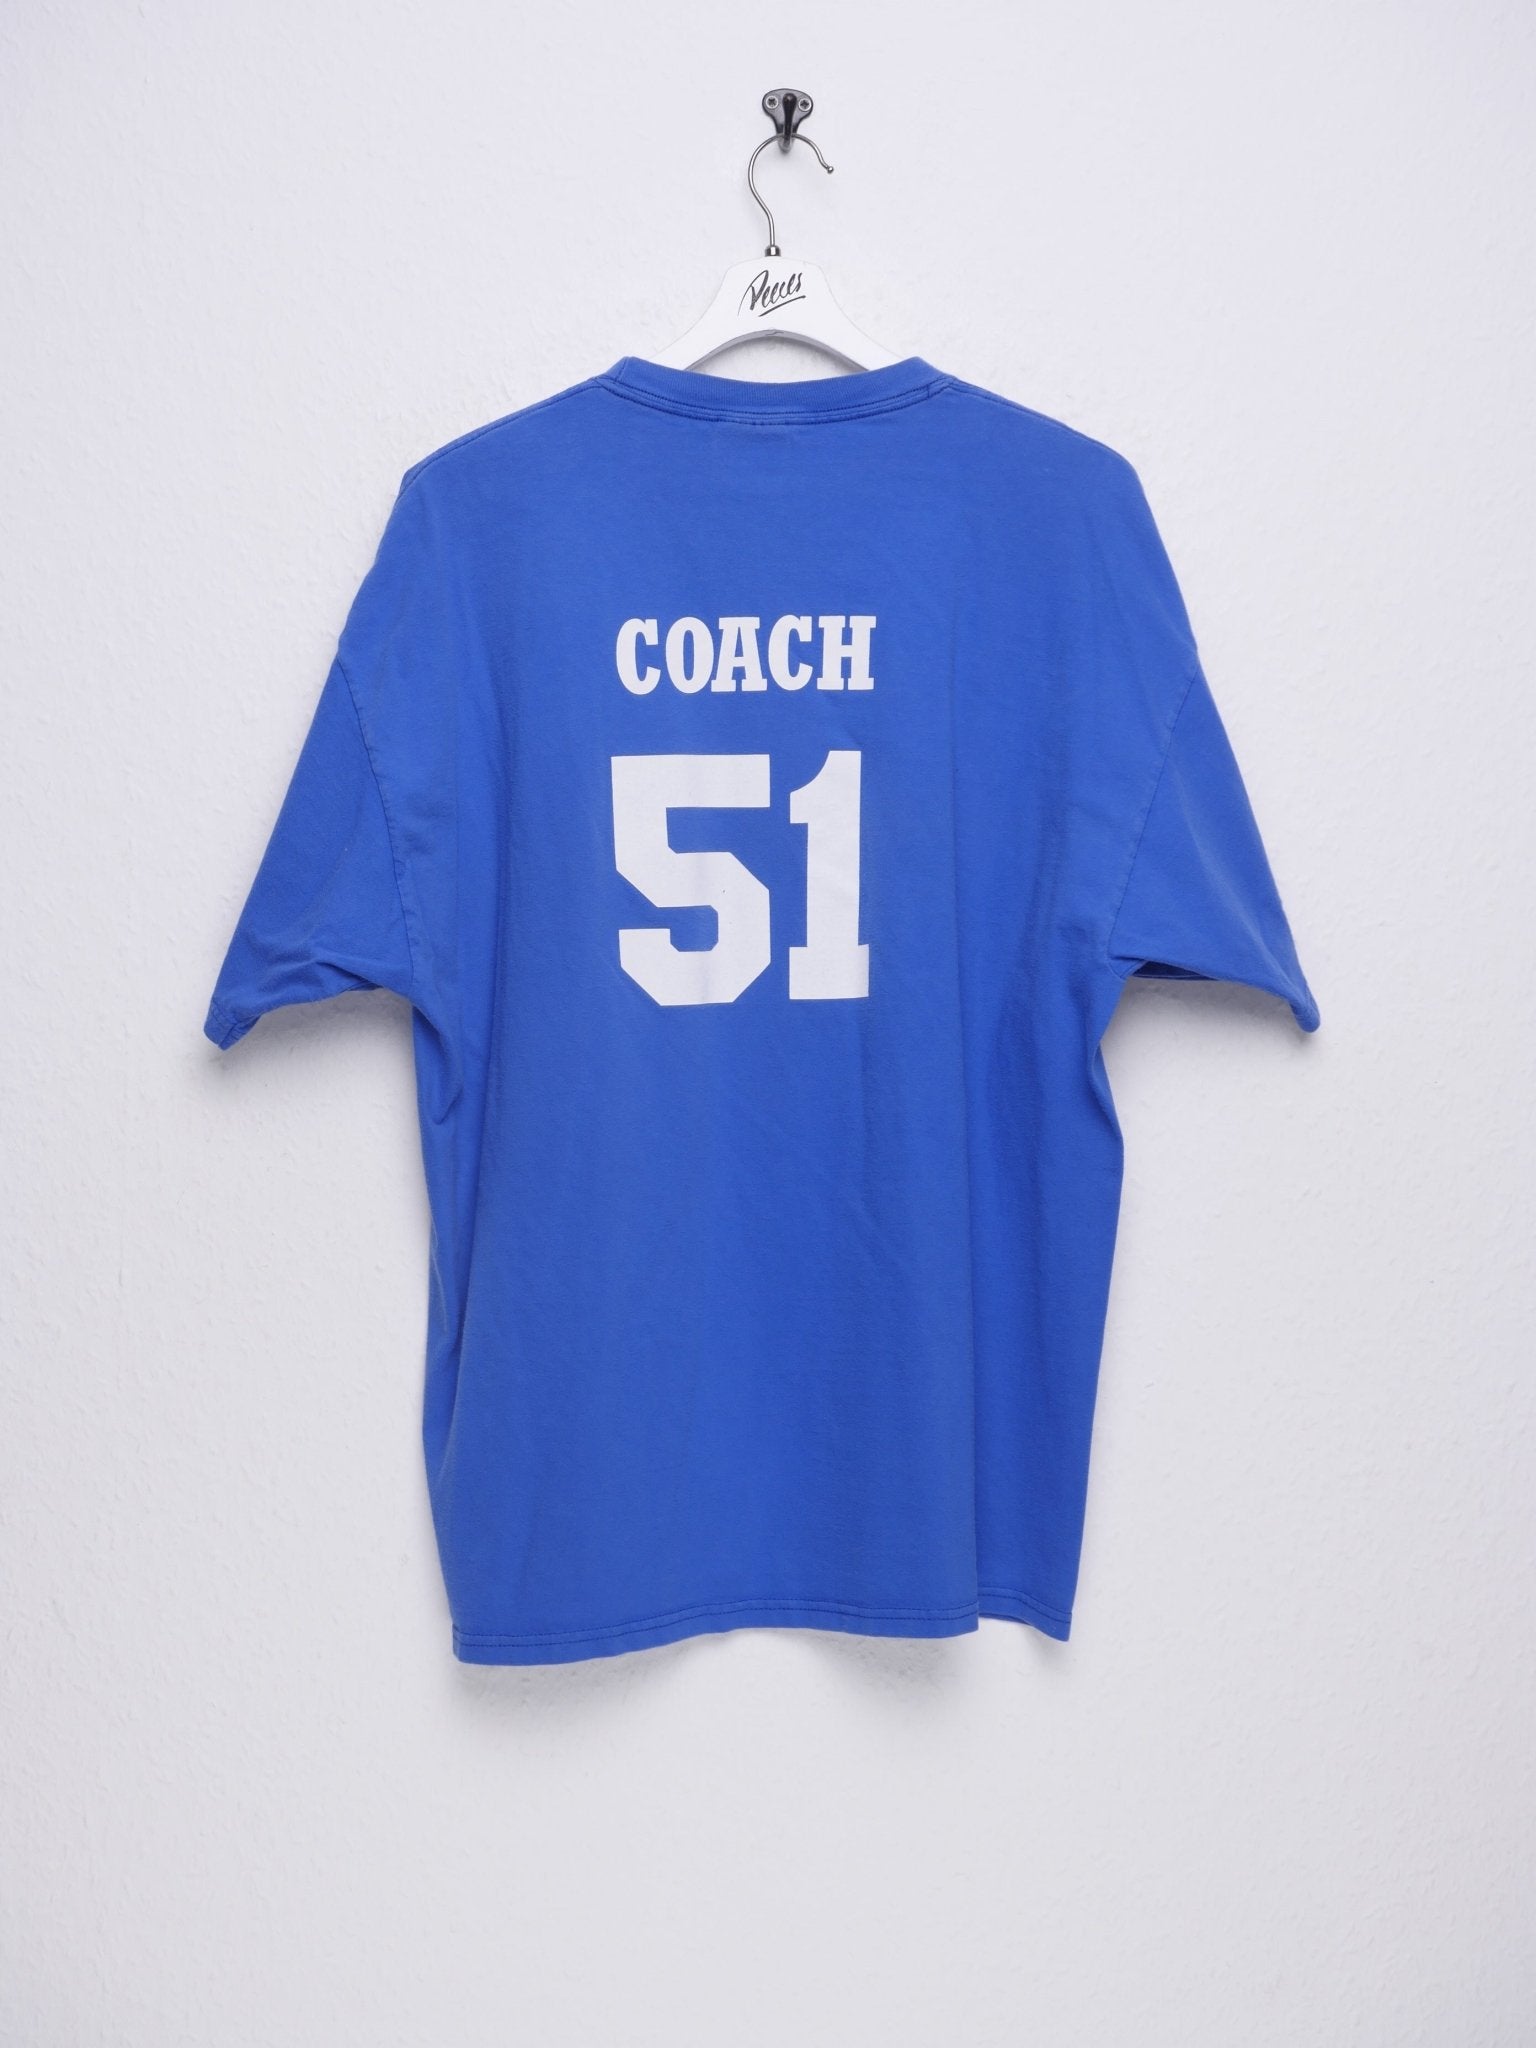 printed Coach blue Shirt - Peeces